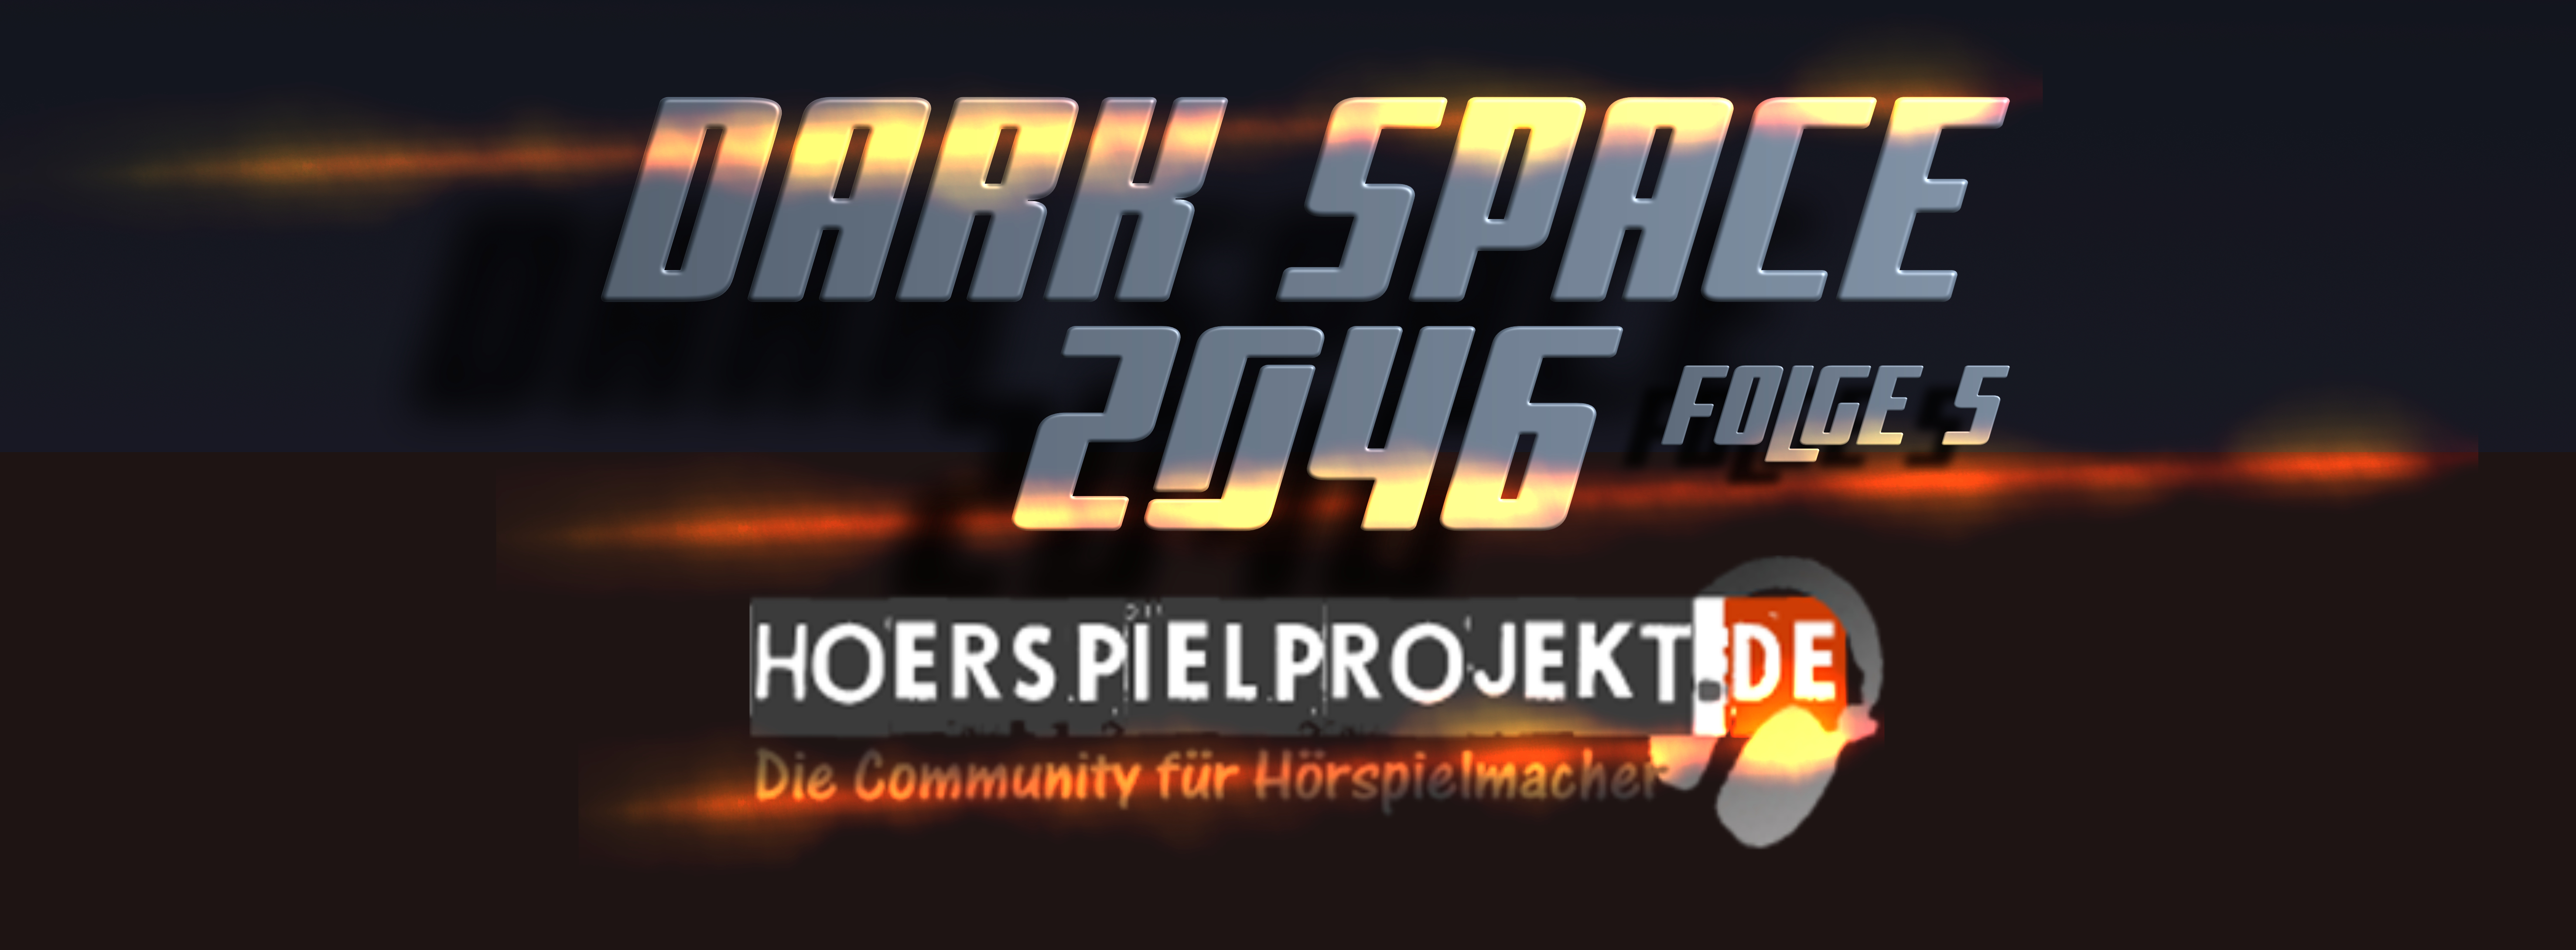 Dark Space 2046 Banner Hoertalk.jpg